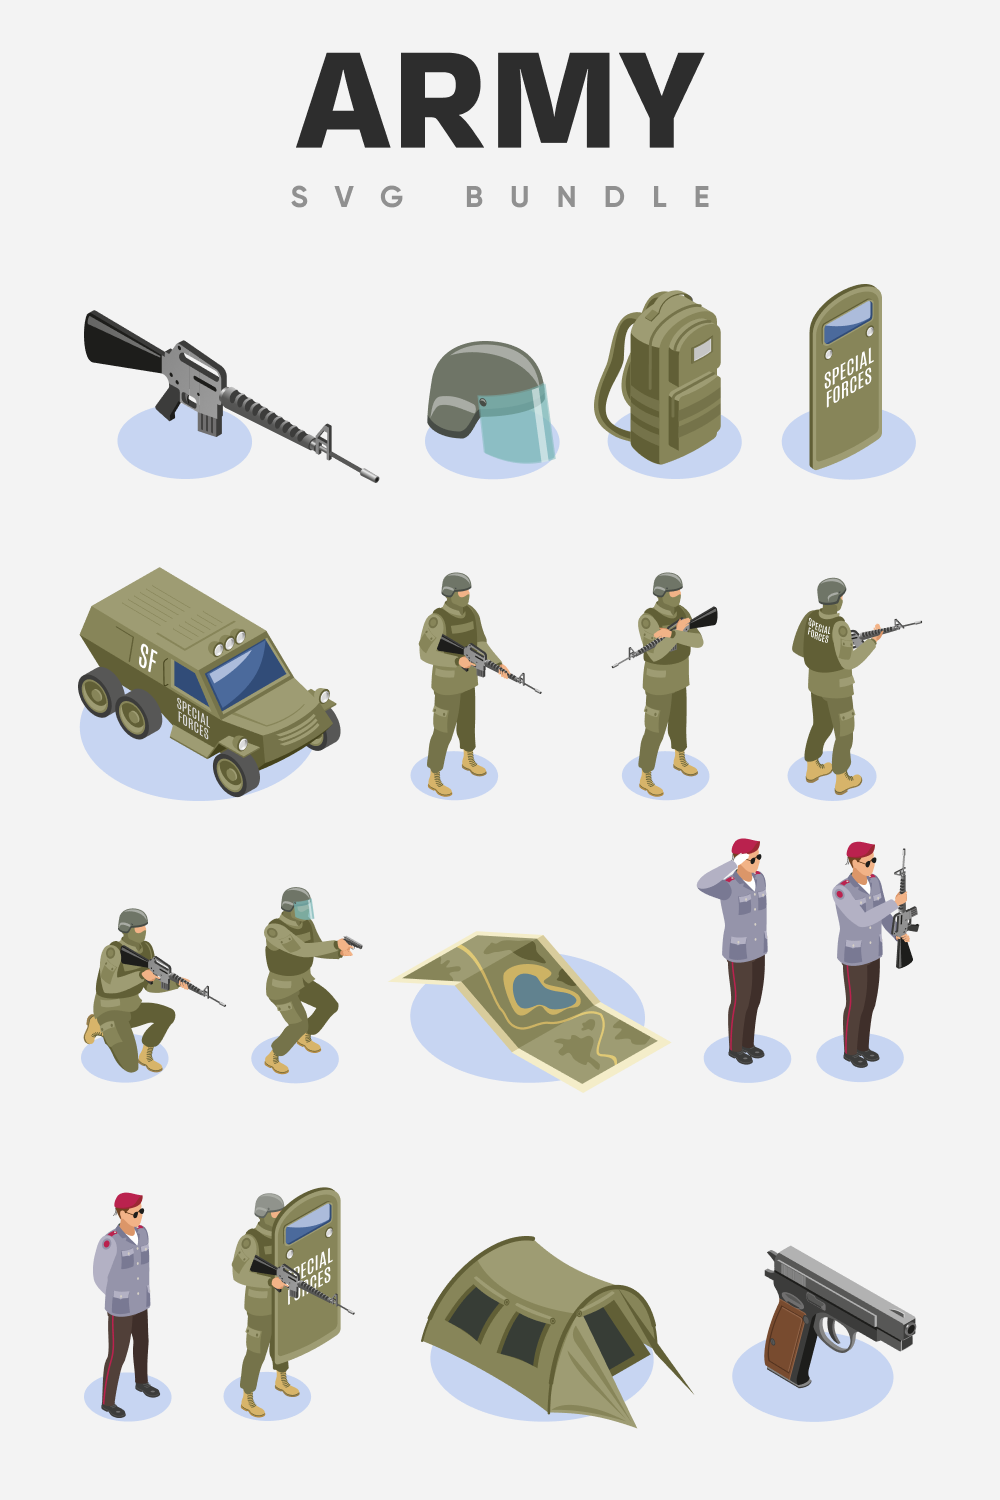 Army SVG bundle.